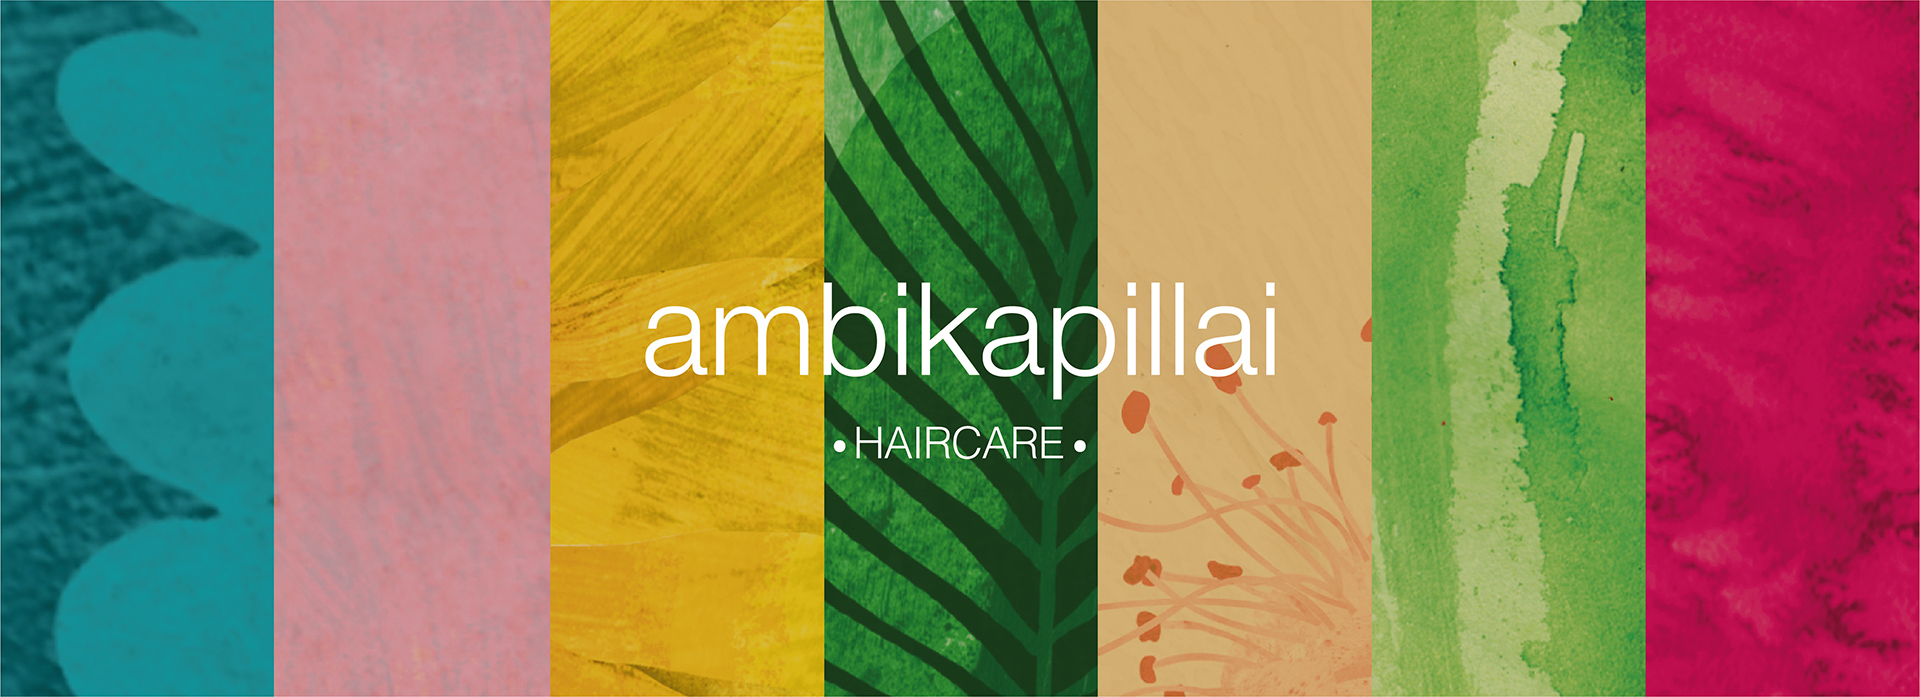 Ambika Pillai Haircare